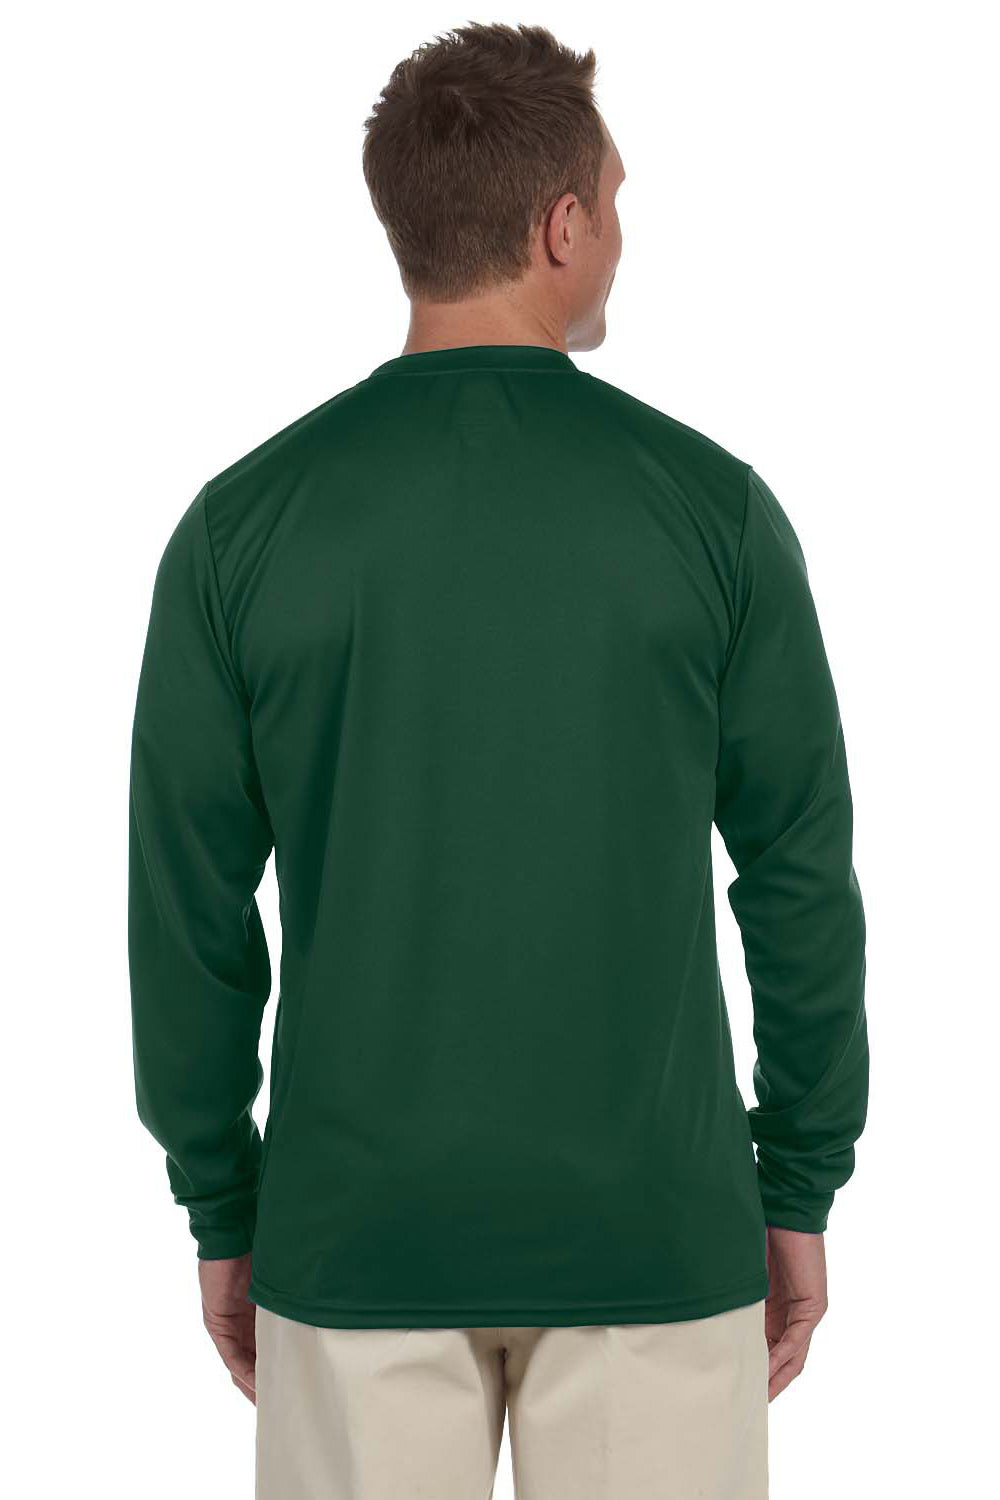 Augusta Sportswear 788 Mens Moisture Wicking Long Sleeve Crewneck T-Shirt Dark Green Model Back